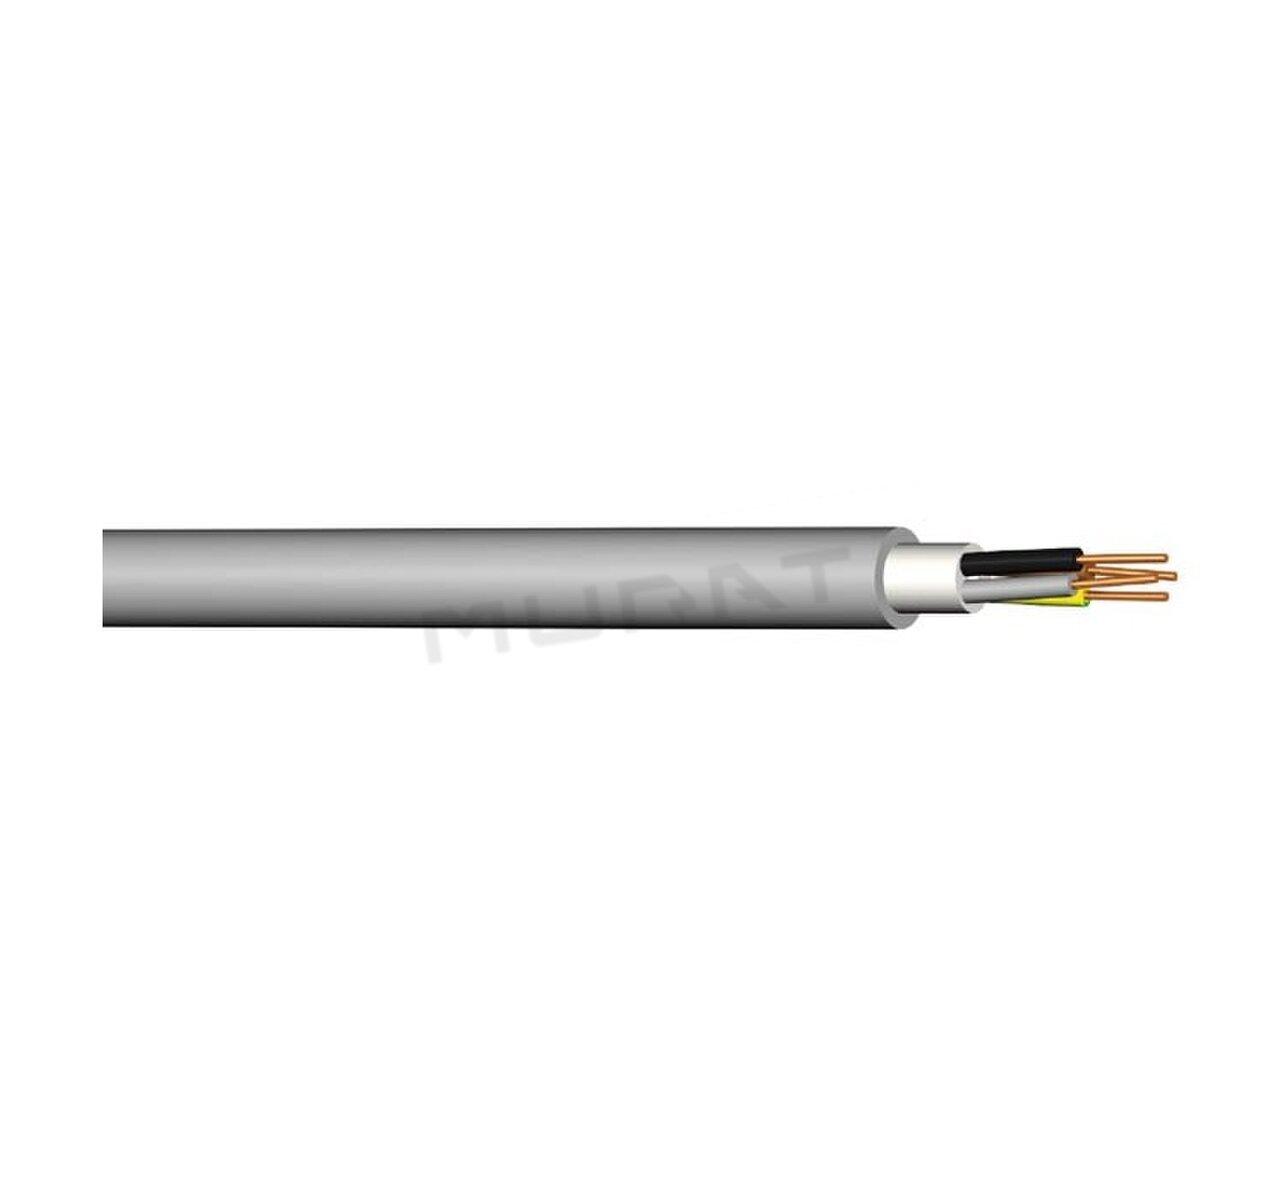 Kábel NYM-J 4x10 mm2